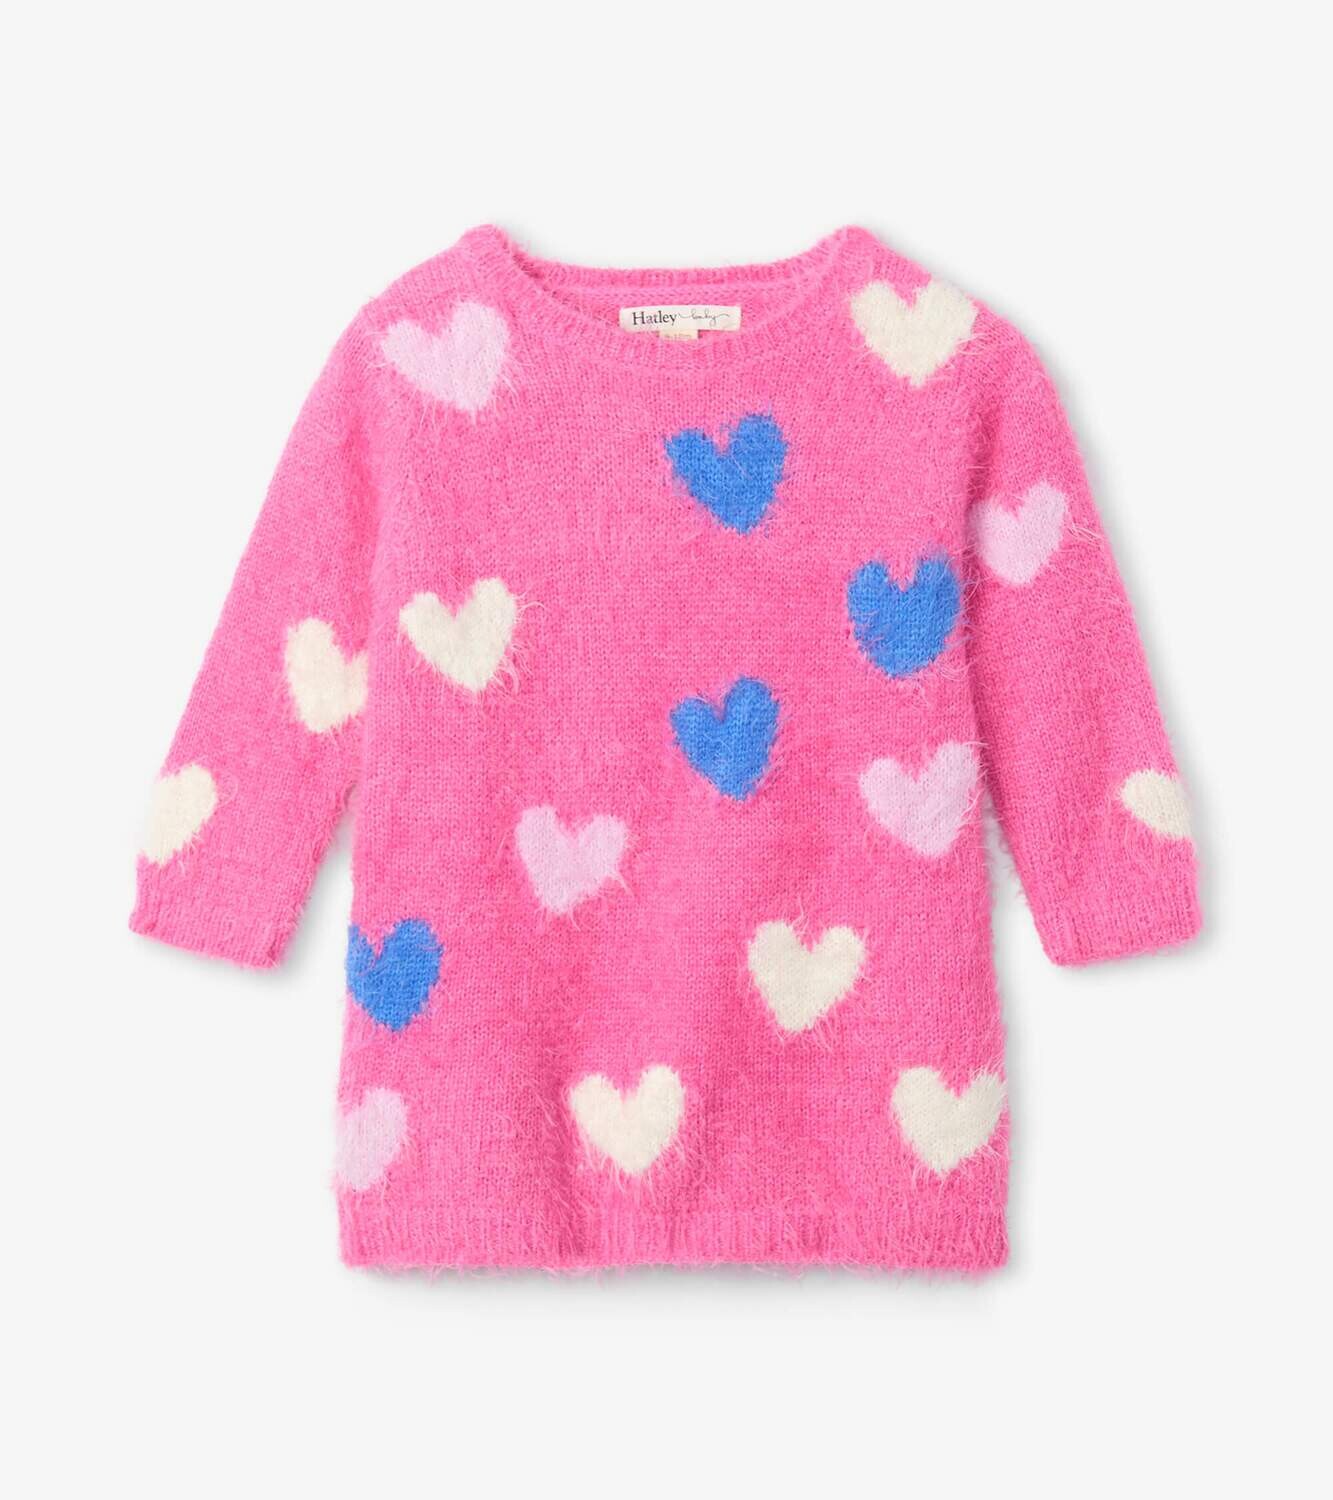 Hatley Baby Girls Confetti Hearts Sweater Dress 36